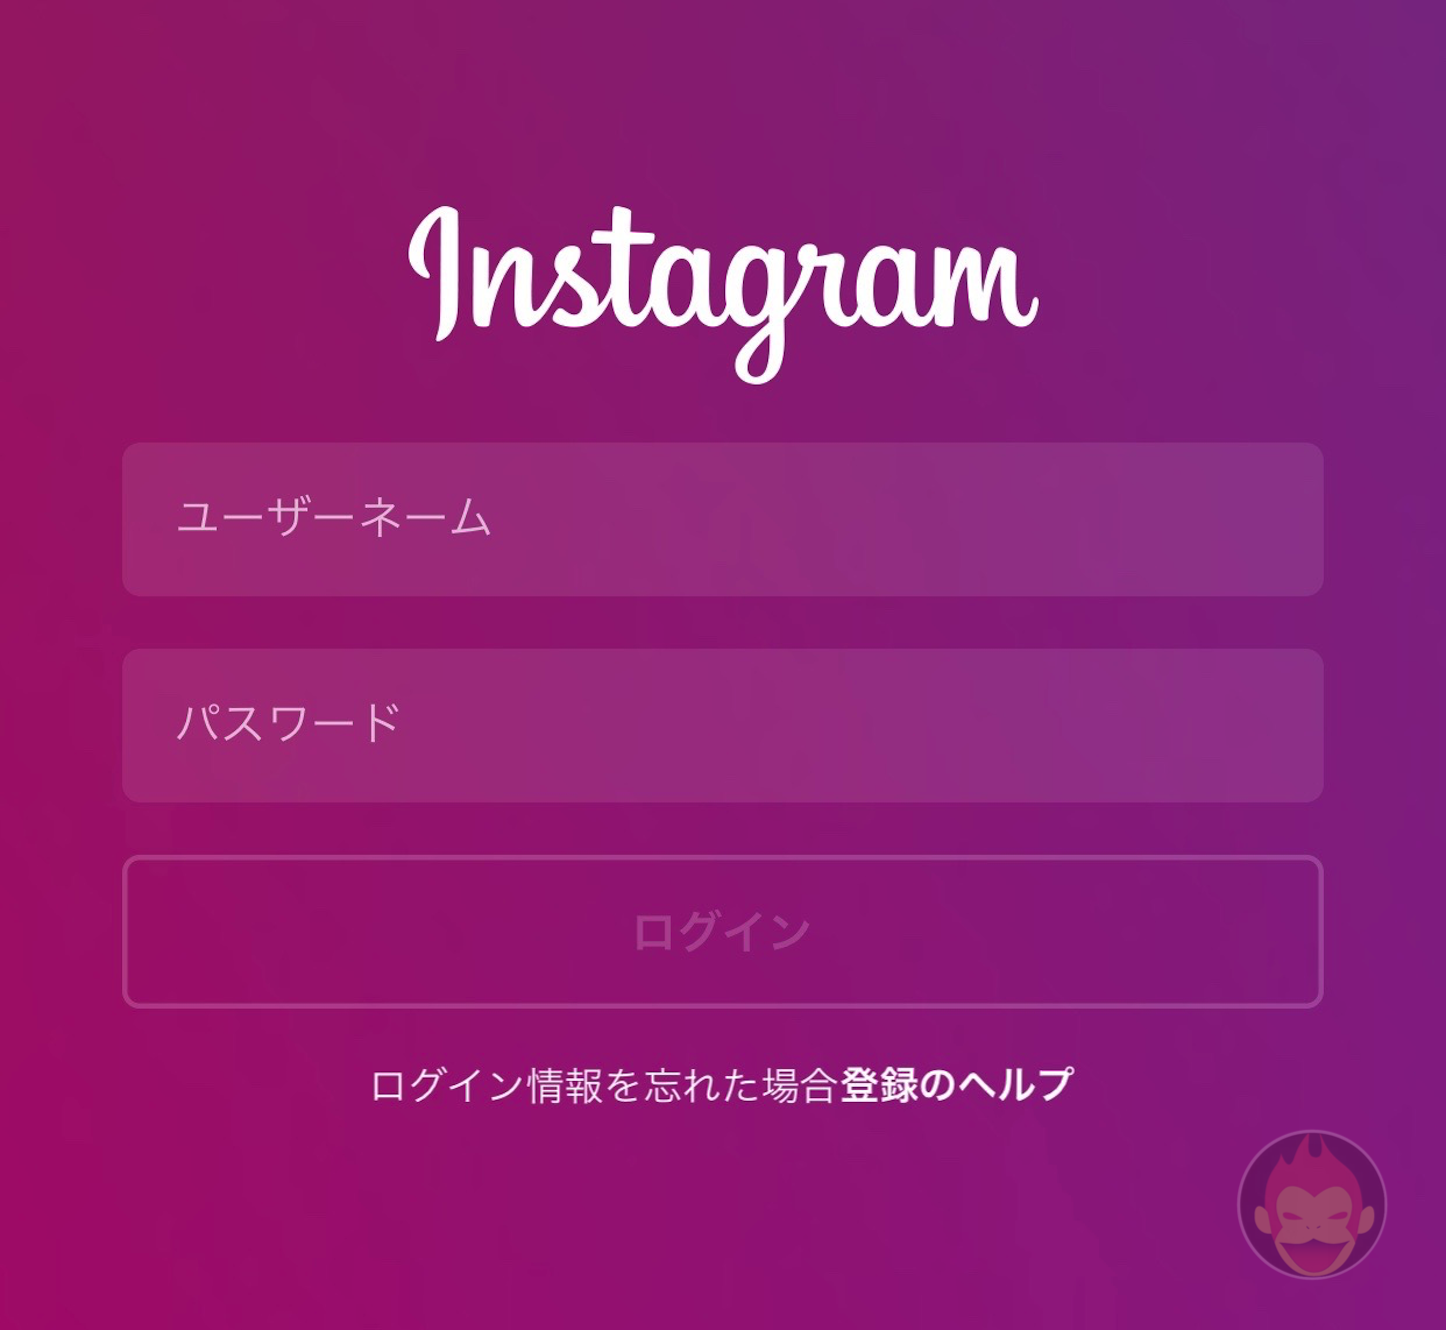 Instagram-Multiple-Account-01.png